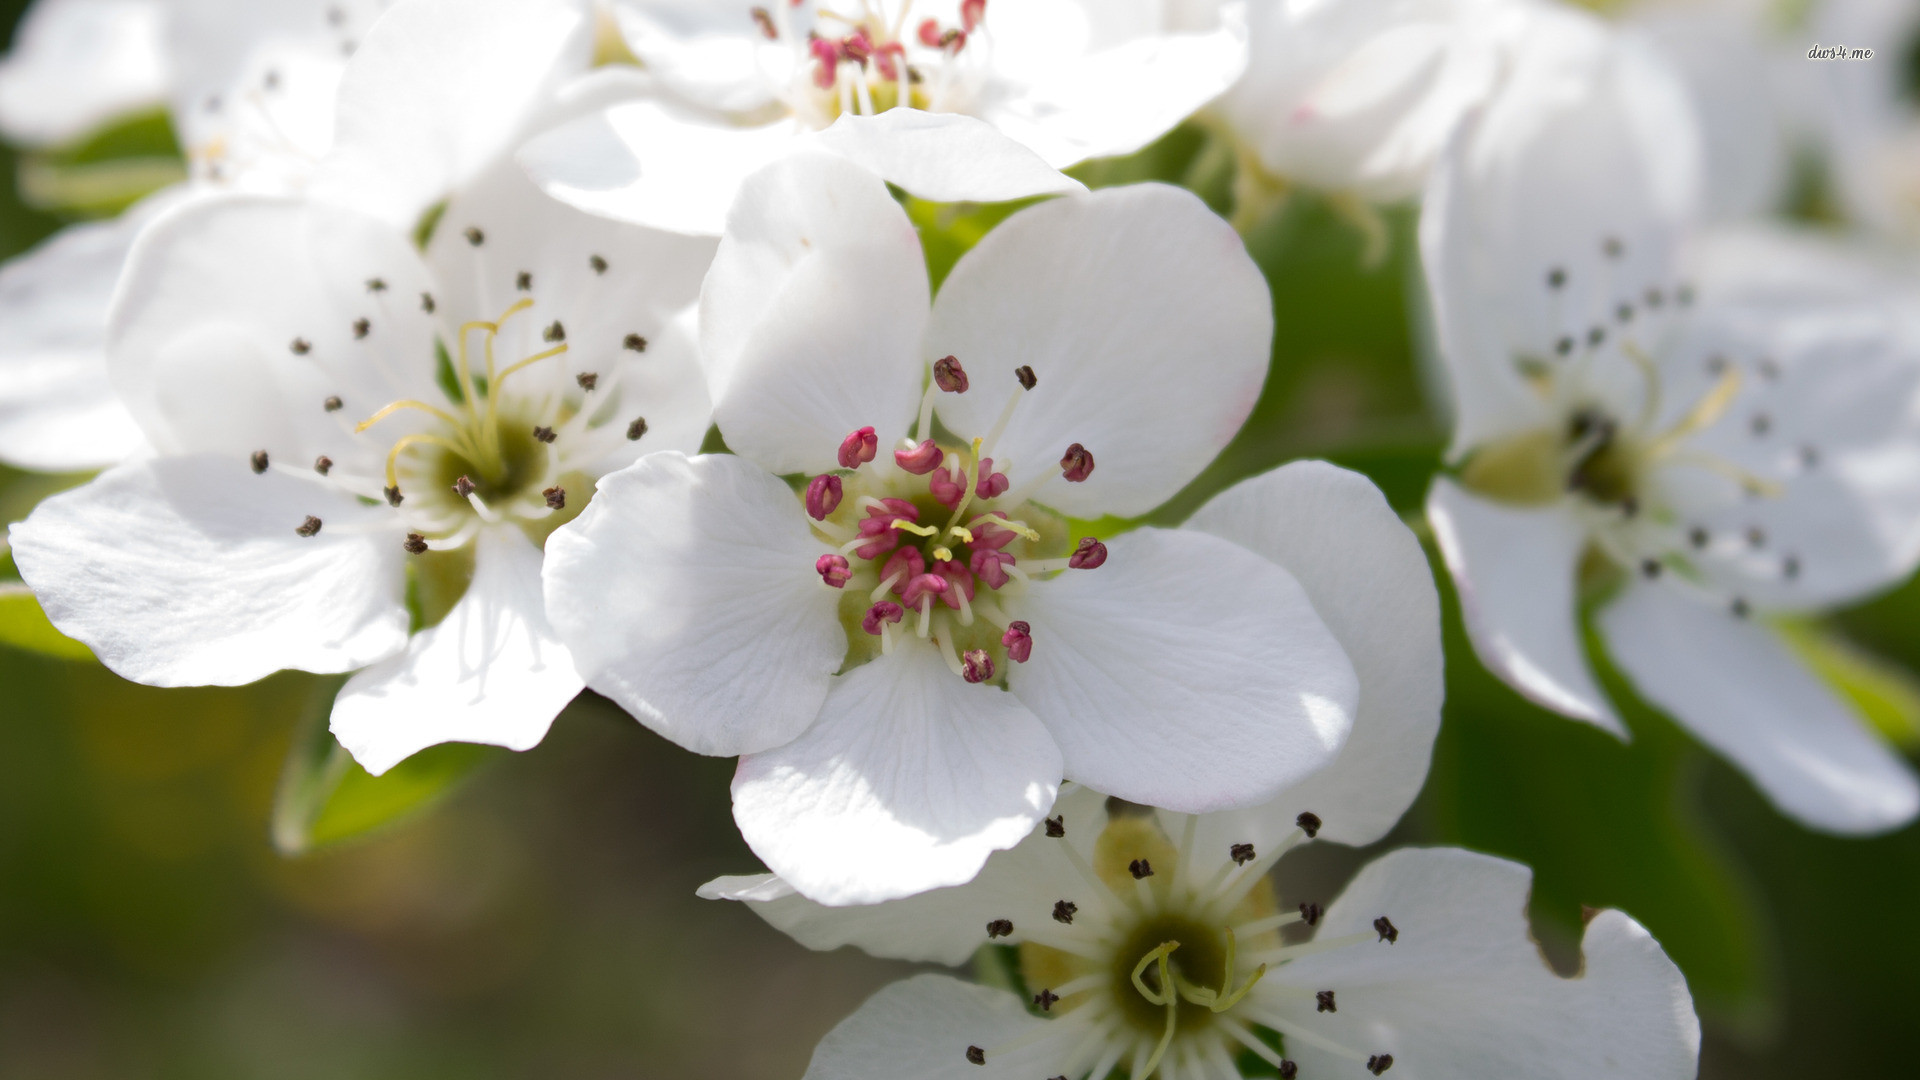 1920x1080 Name: 27782-pear-blossoms--flower-wallpaper.jpg Views